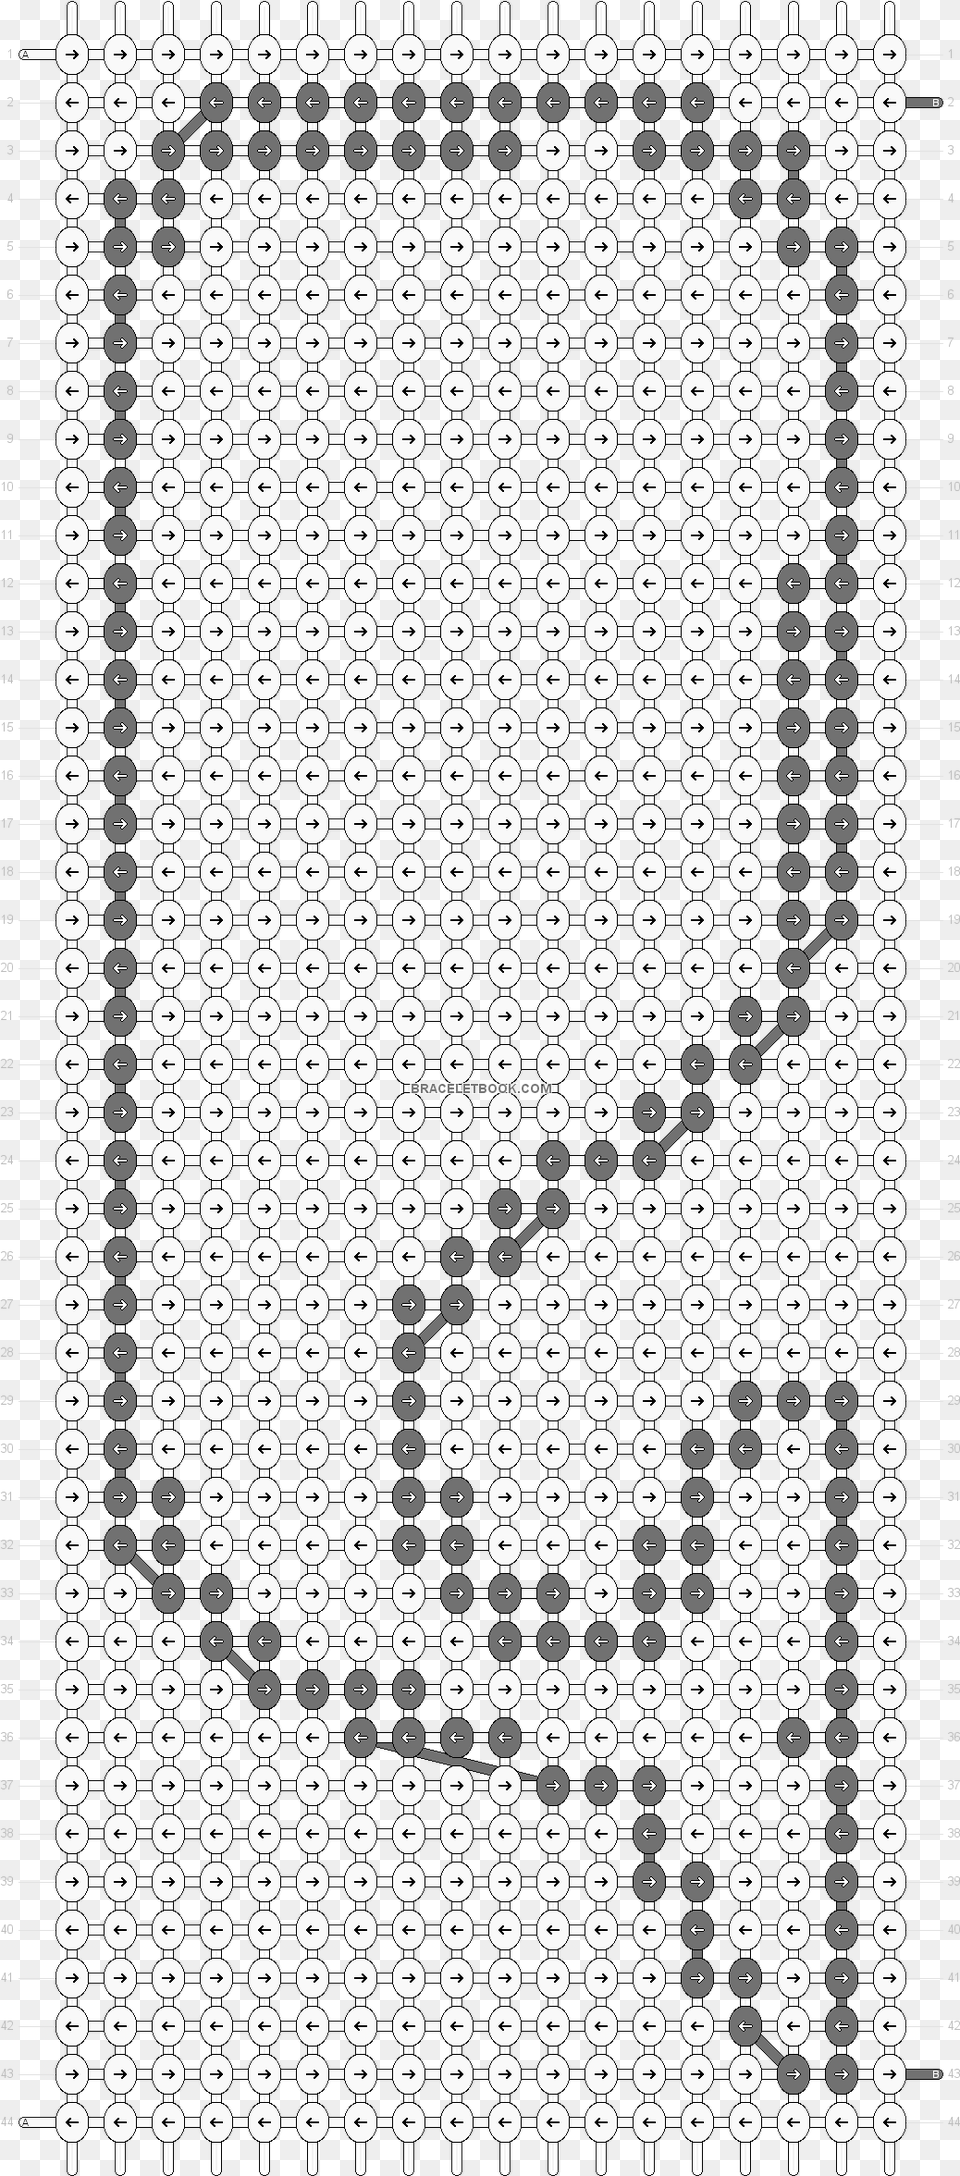 Alpha Pattern Friendship Bracelet Pattern Batman, Home Decor, Rug, Gate, Text Png Image